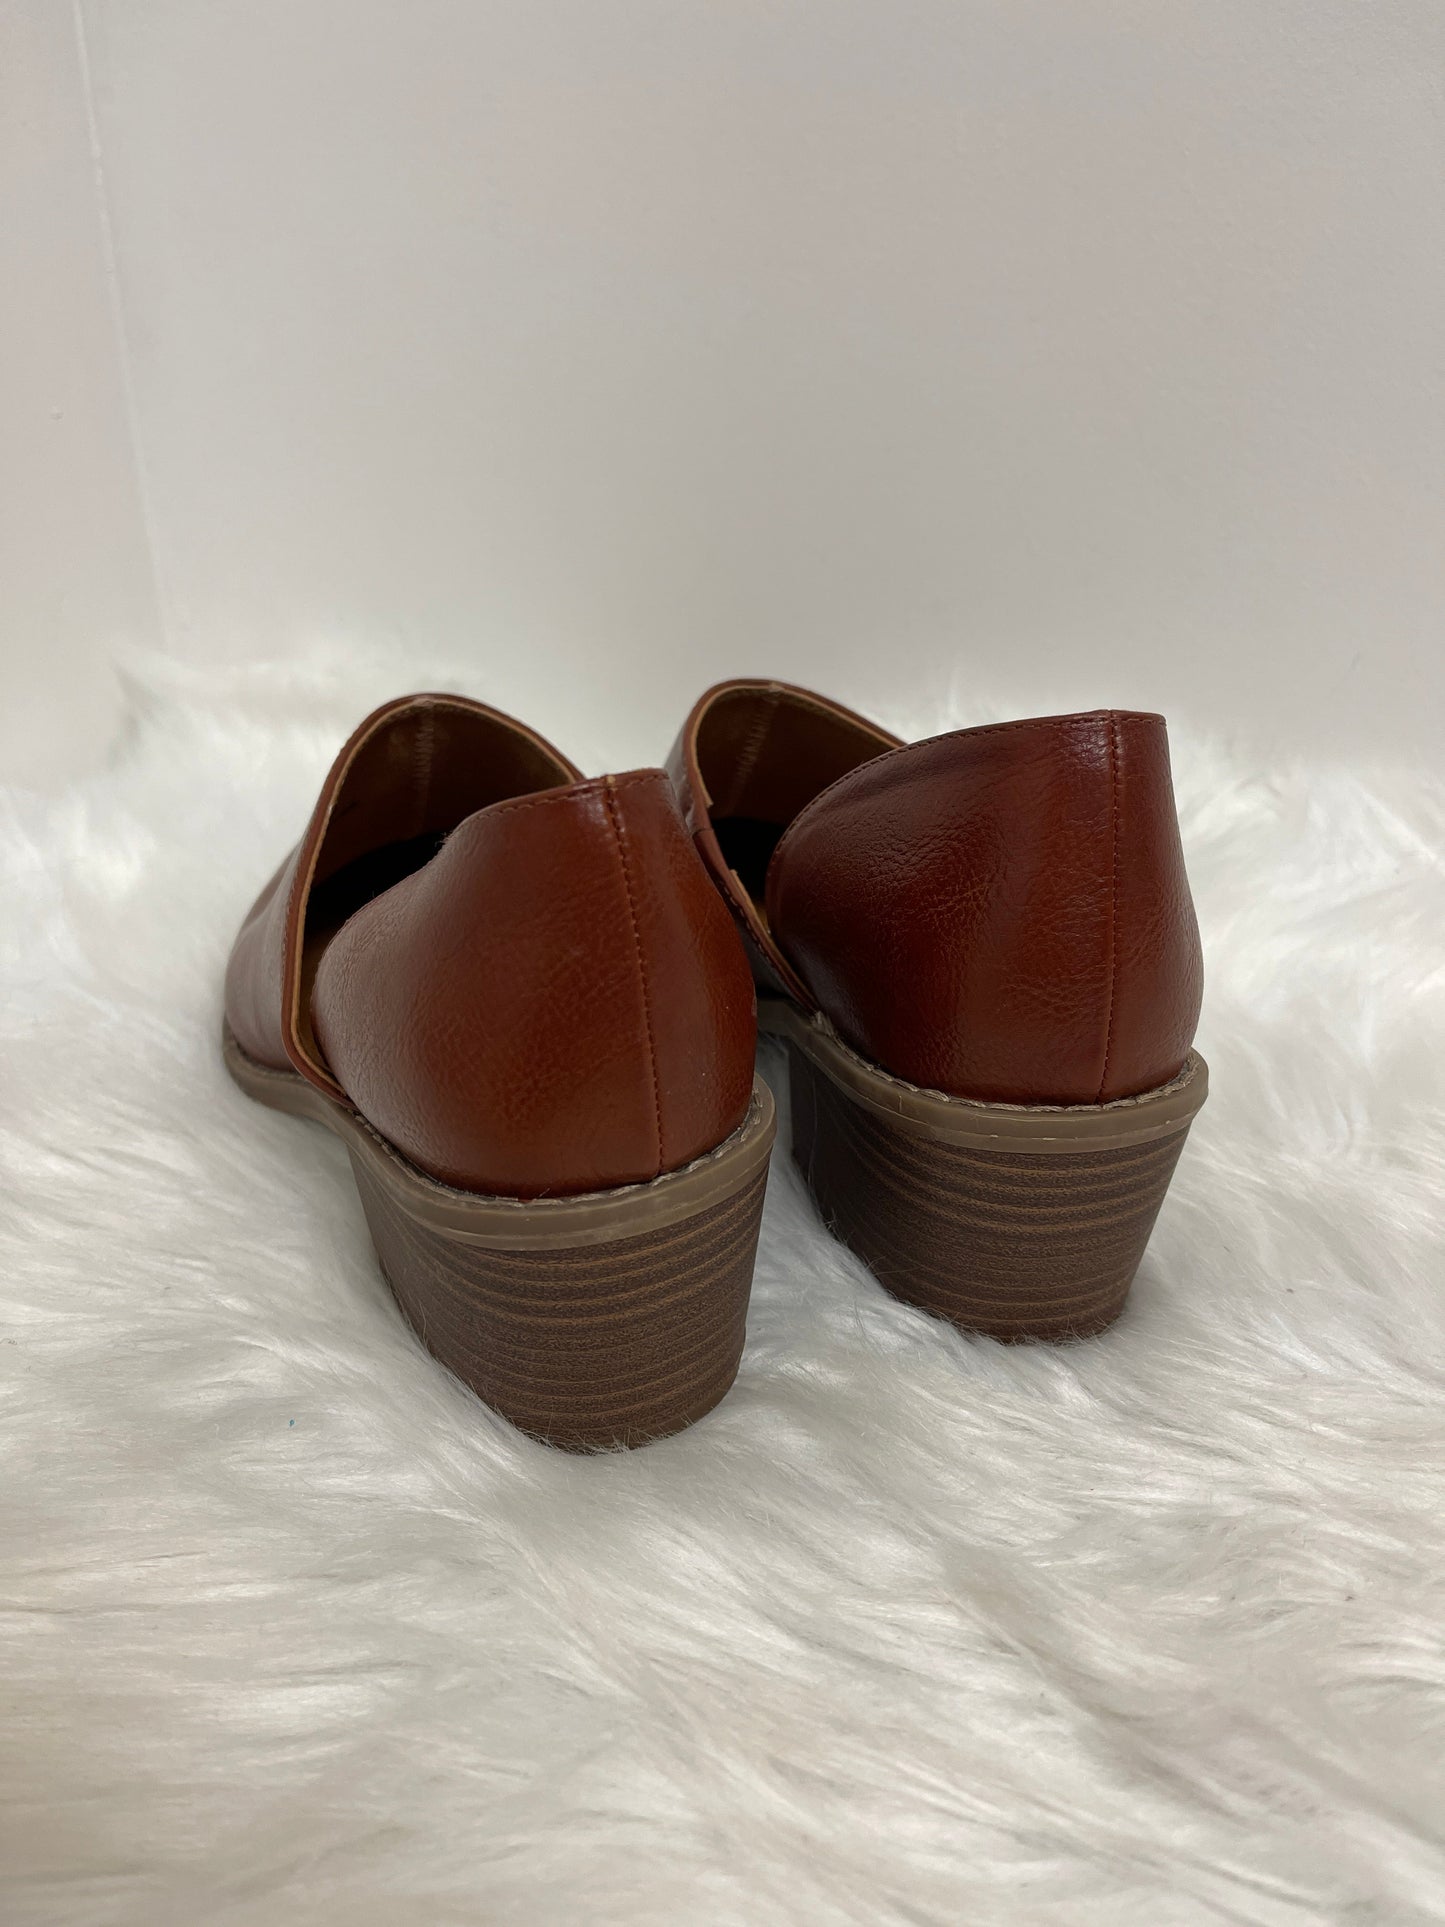 Brown Sandals Heels Block Universal Thread, Size 9.5